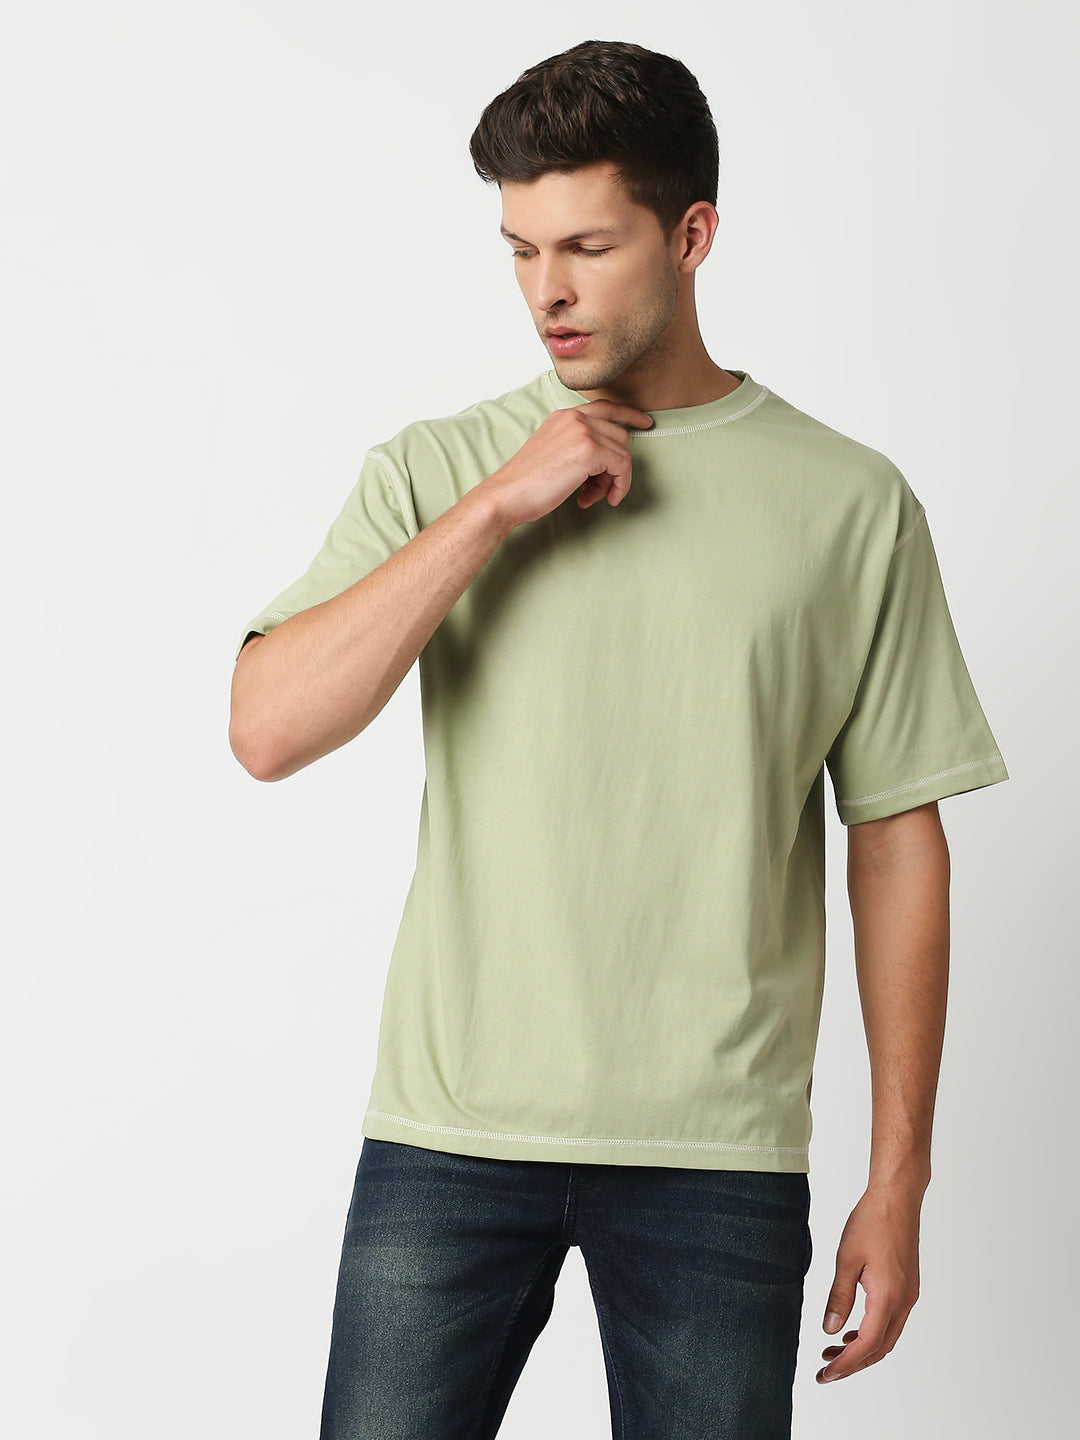 Buy Blamblack Men's Baggy Light Green Color T Shirt